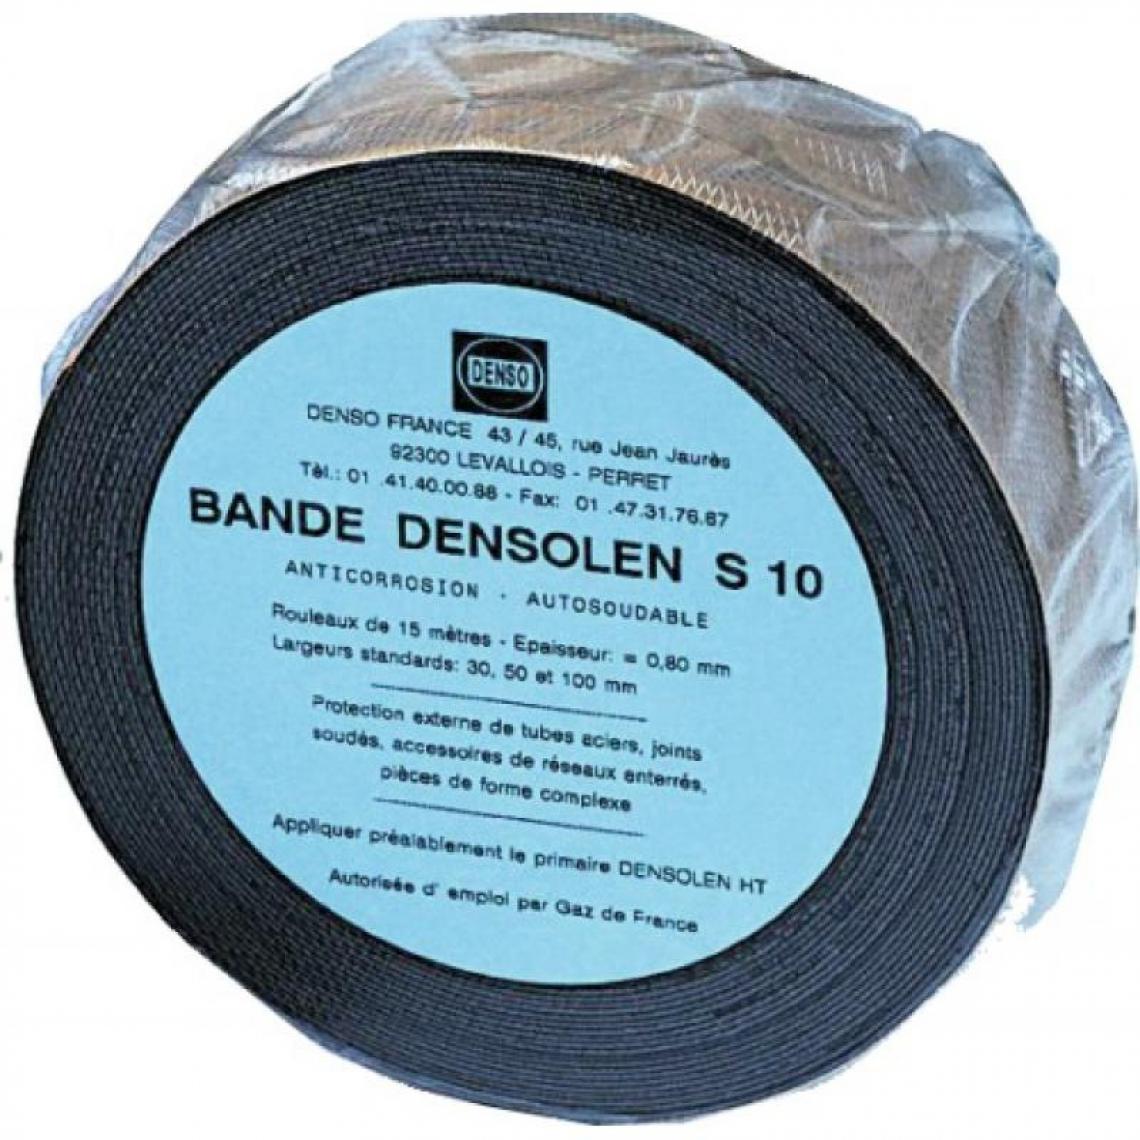 Denso - Bande Densolen S 10 largeur 50 mm longueur 15 - Mastic, silicone, joint